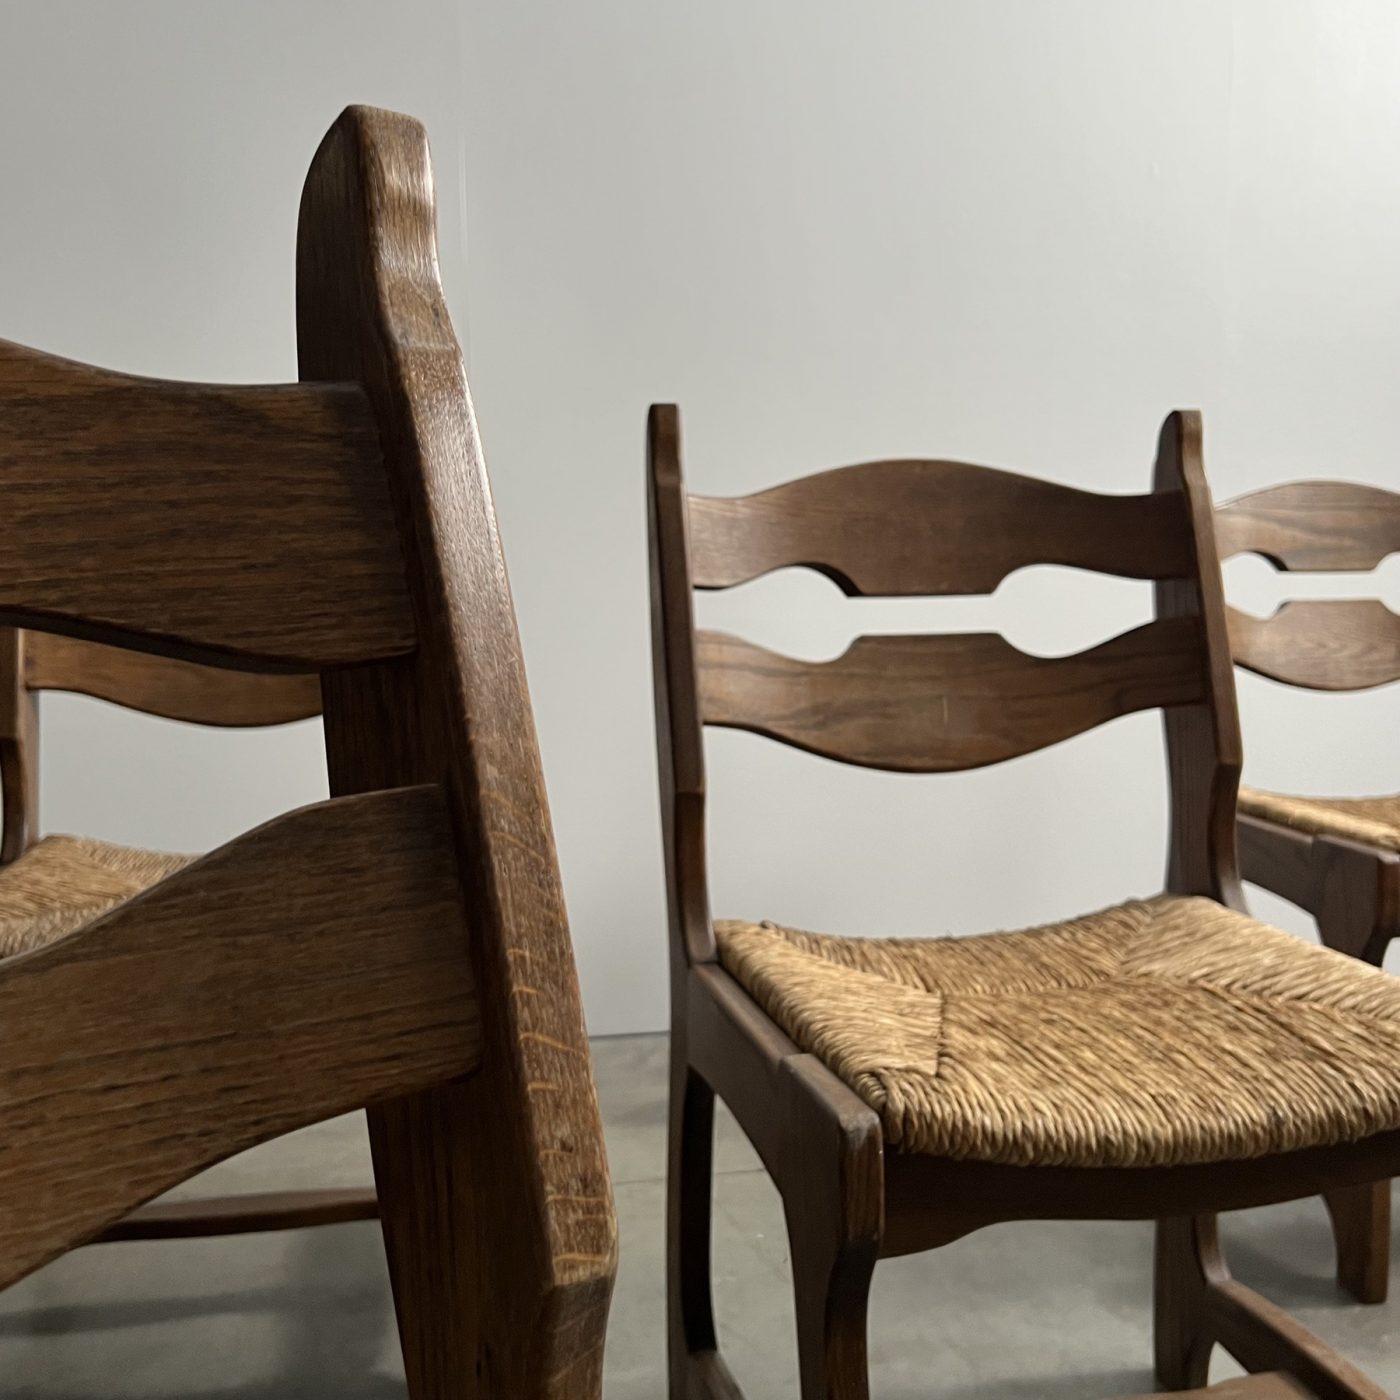 objet-vagabond-oak-chairs0010